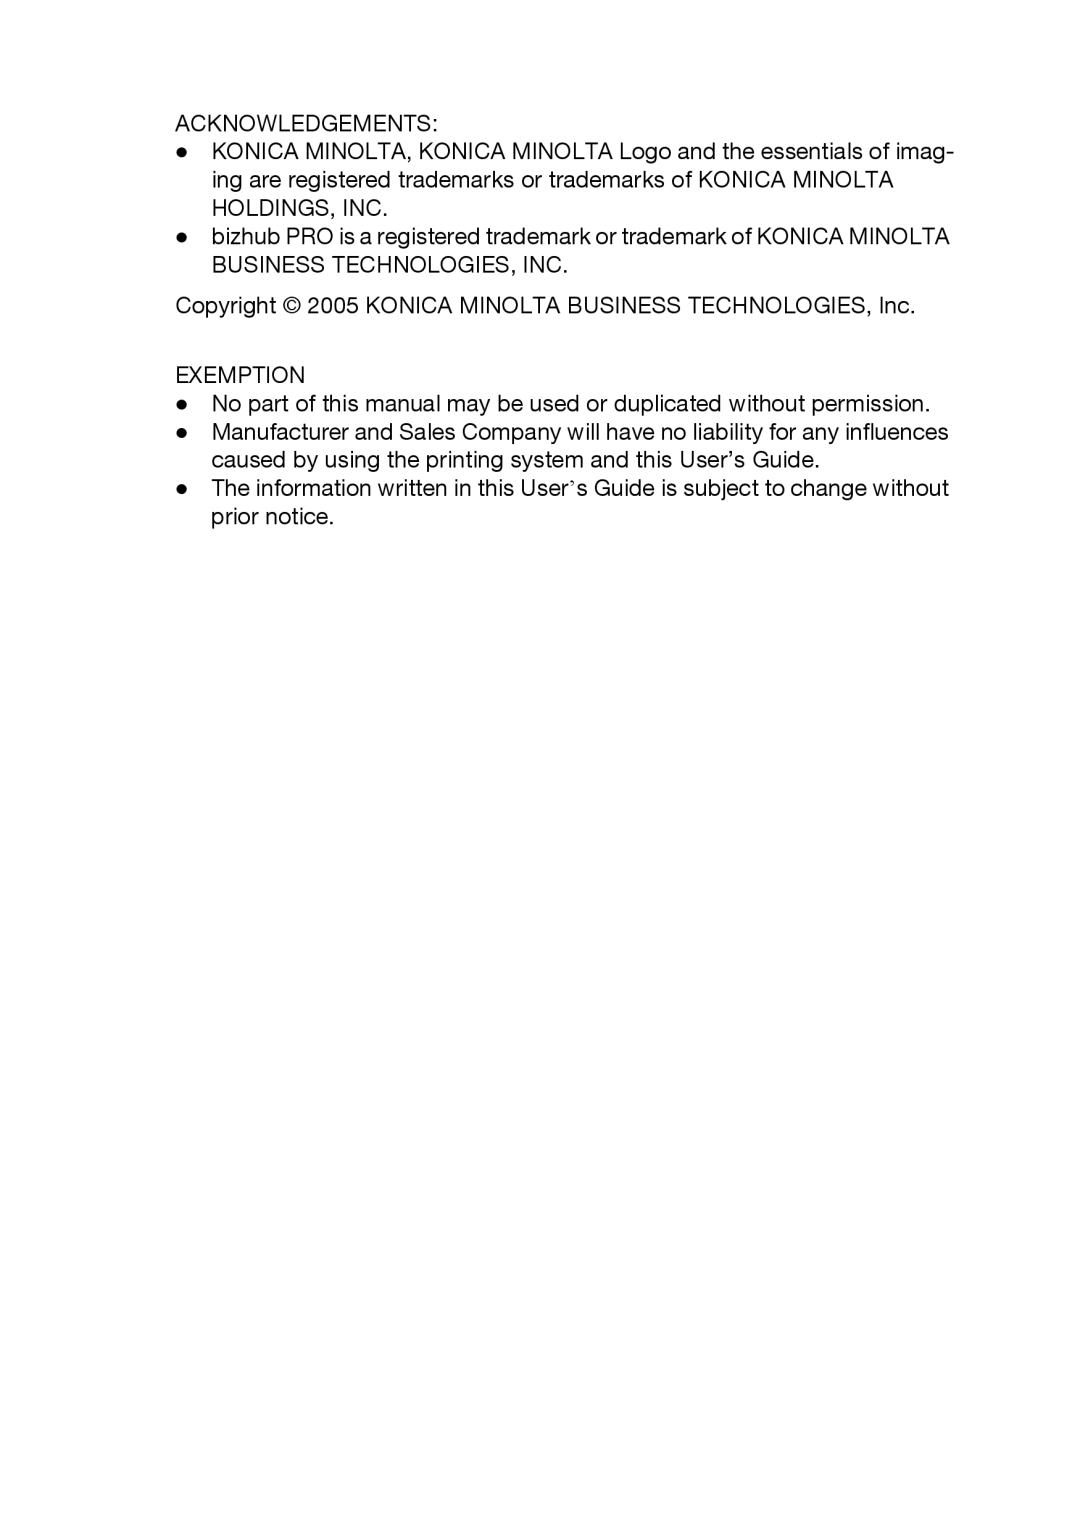 Konica Minolta 920 manual Acknowledgements, Copyright 2005 KONICA MINOLTA BUSINESS TECHNOLOGIES, Inc EXEMPTION 